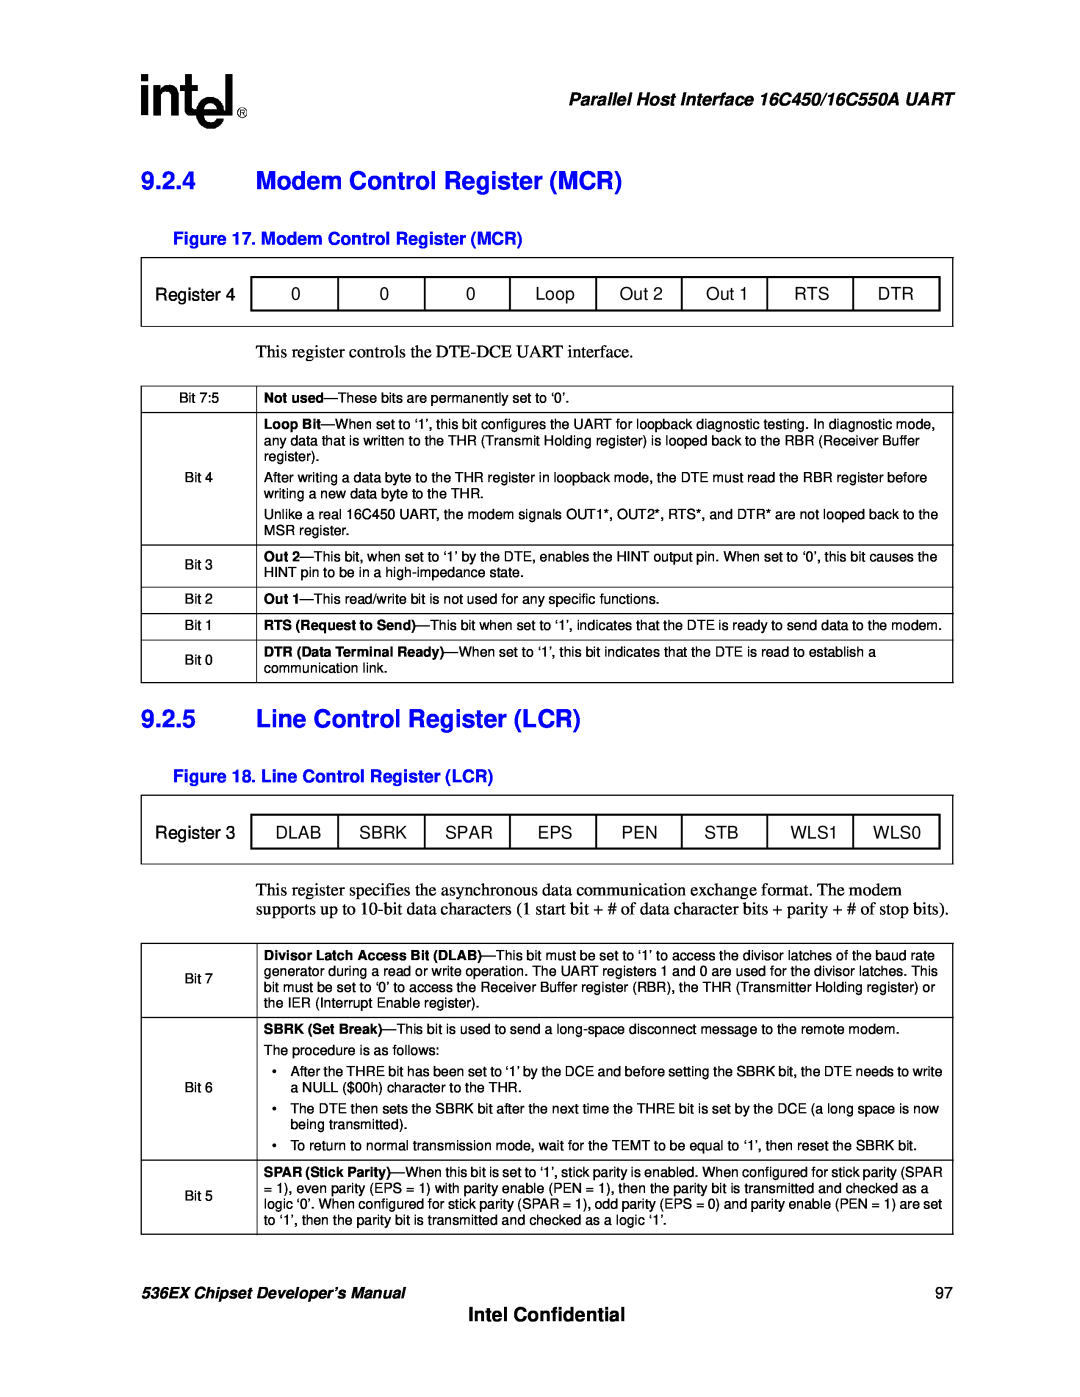 Intel 537EX manual 9.2.4Modem Control Register MCR, 9.2.5Line Control Register LCR, Intel Confidential 